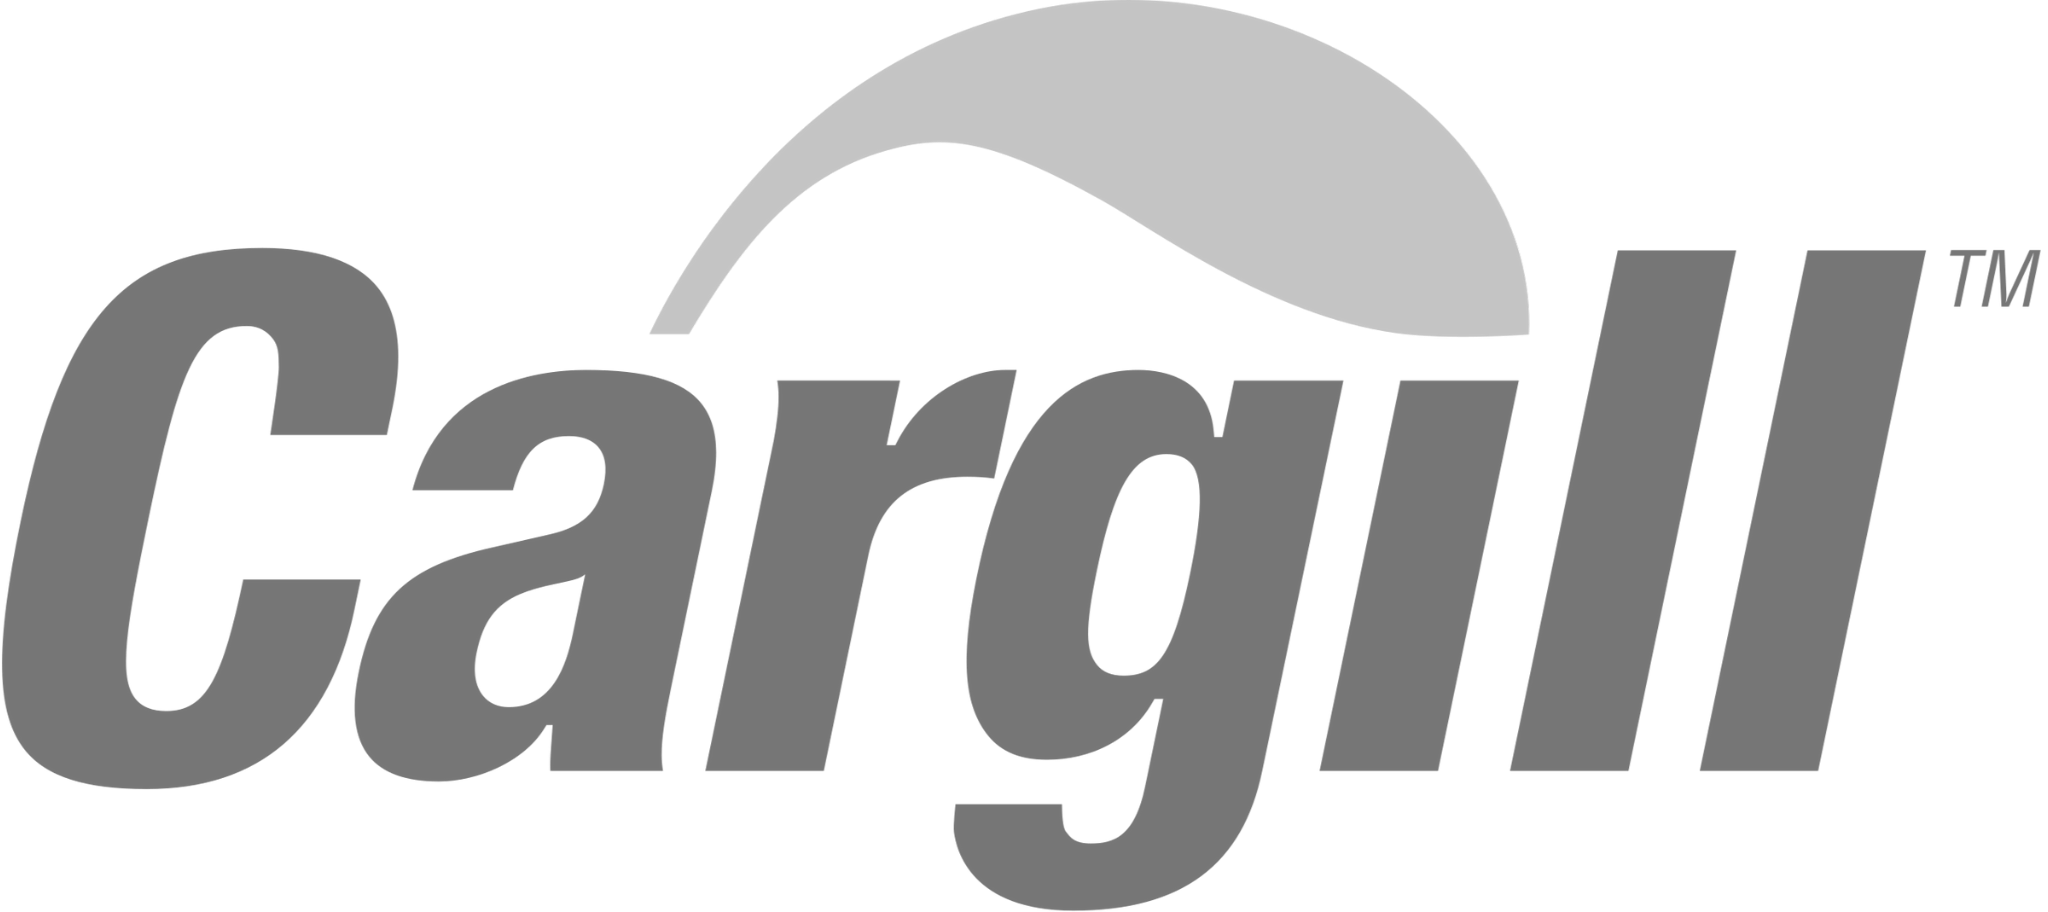 Ооо каргилл. Cargill логотип. Каргилл иконка. Каргилл без фона. Логотип Каргилл на прозрачном фоне.